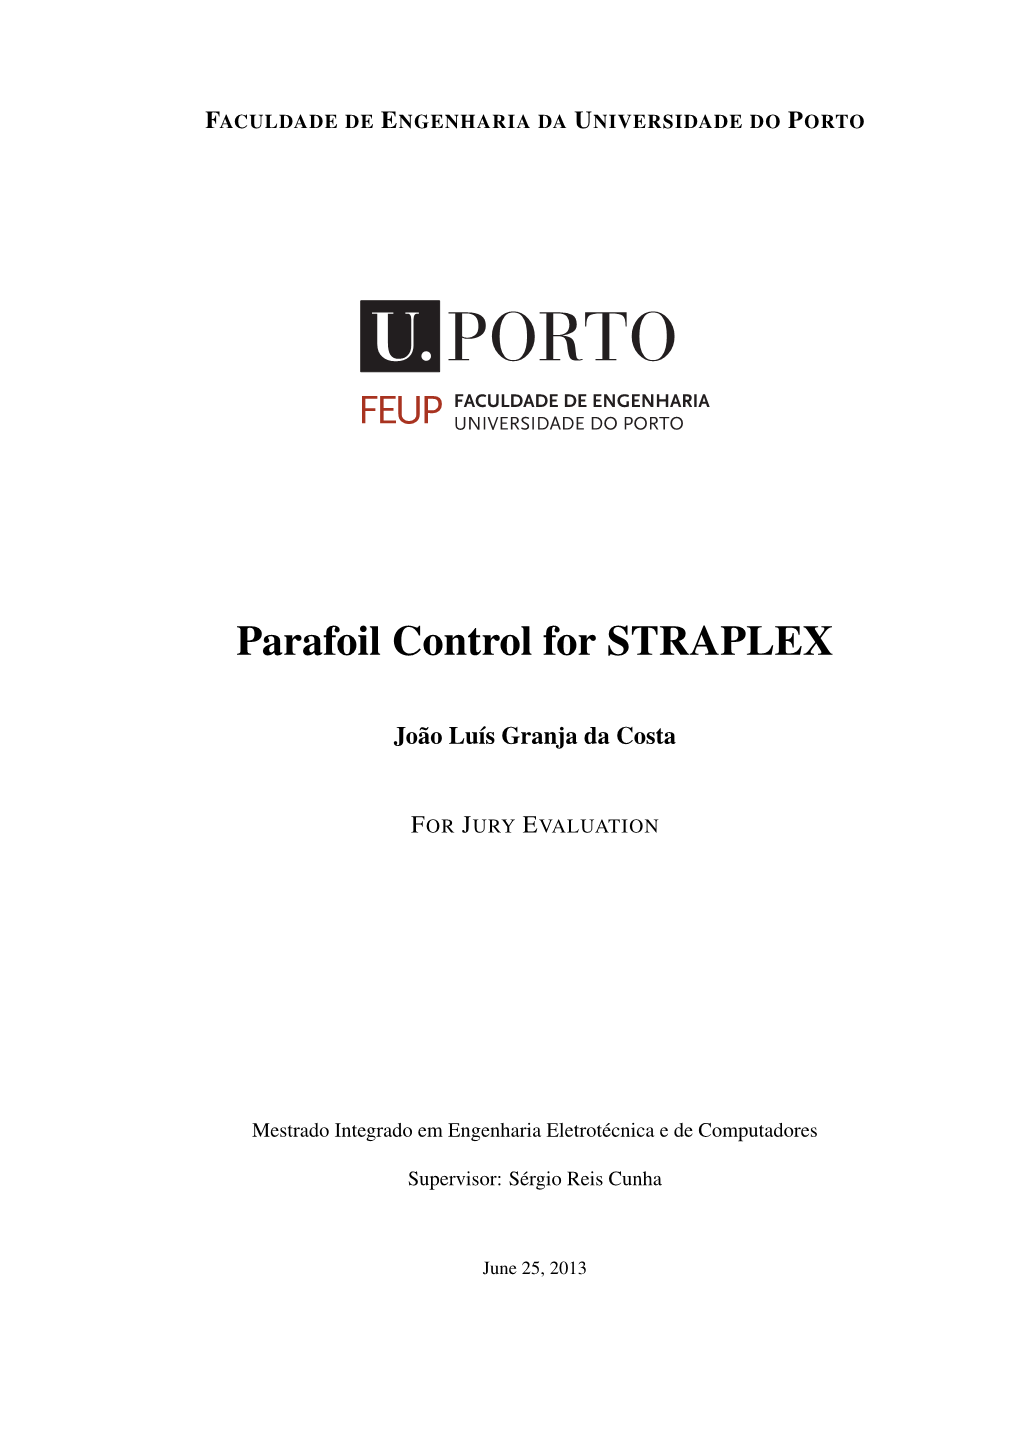 Parafoil Control for STRAPLEX